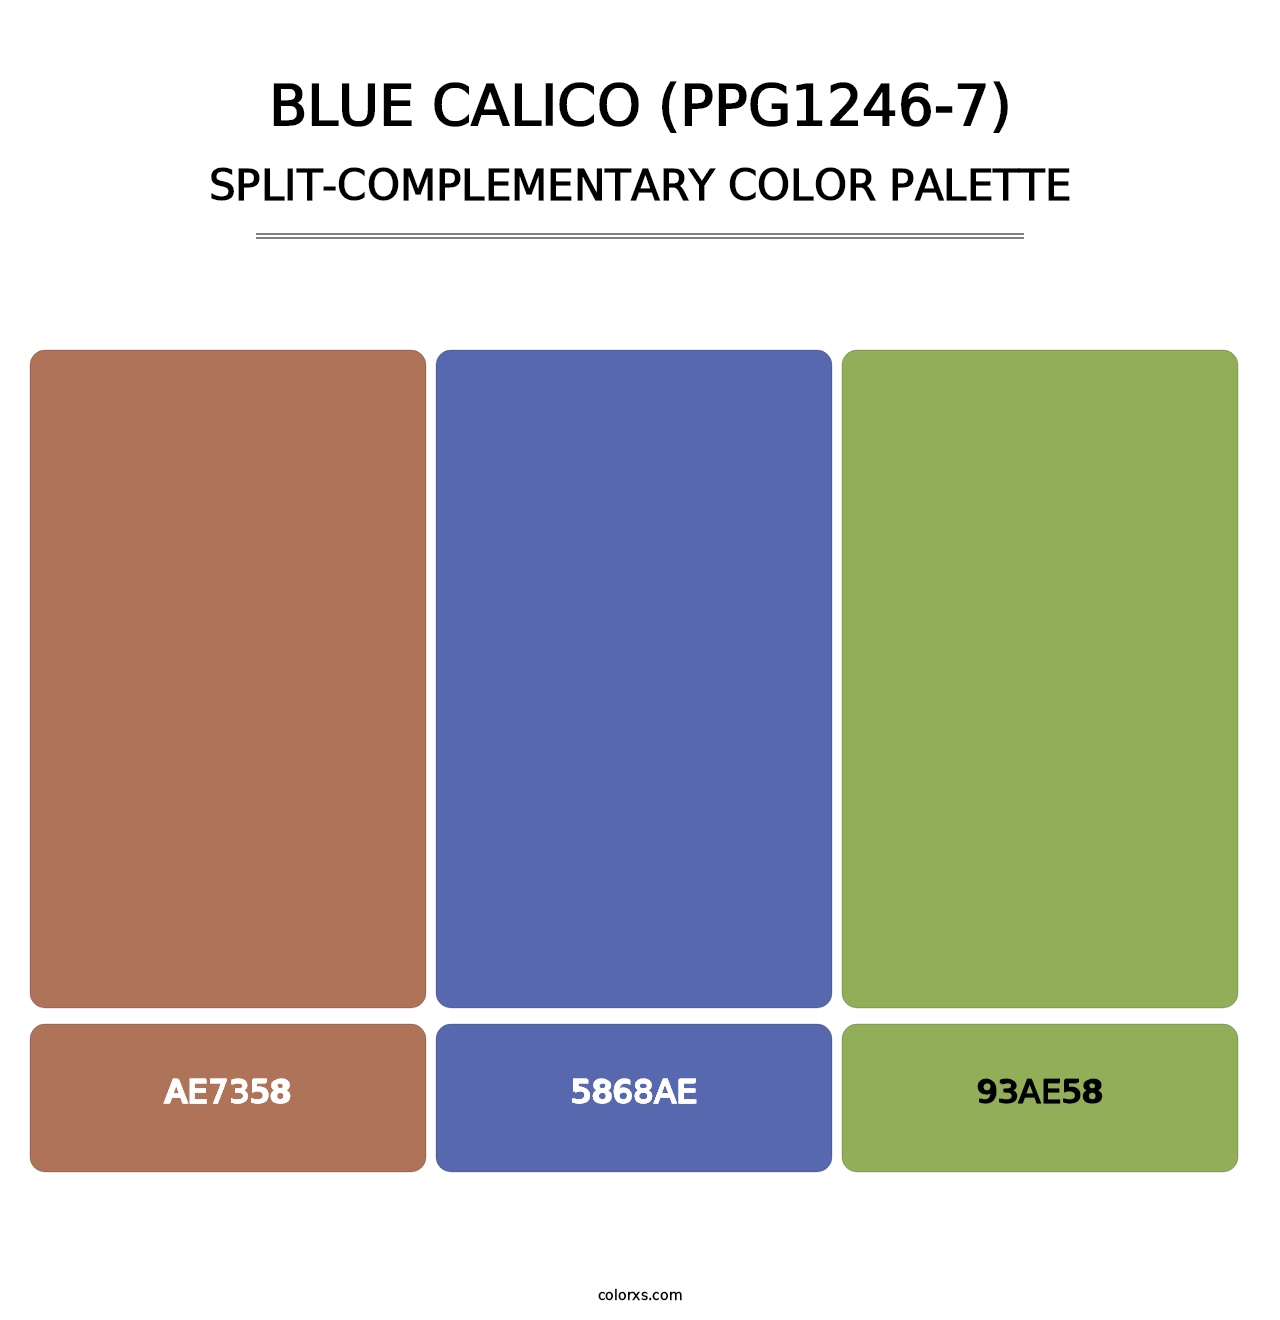 Blue Calico (PPG1246-7) - Split-Complementary Color Palette